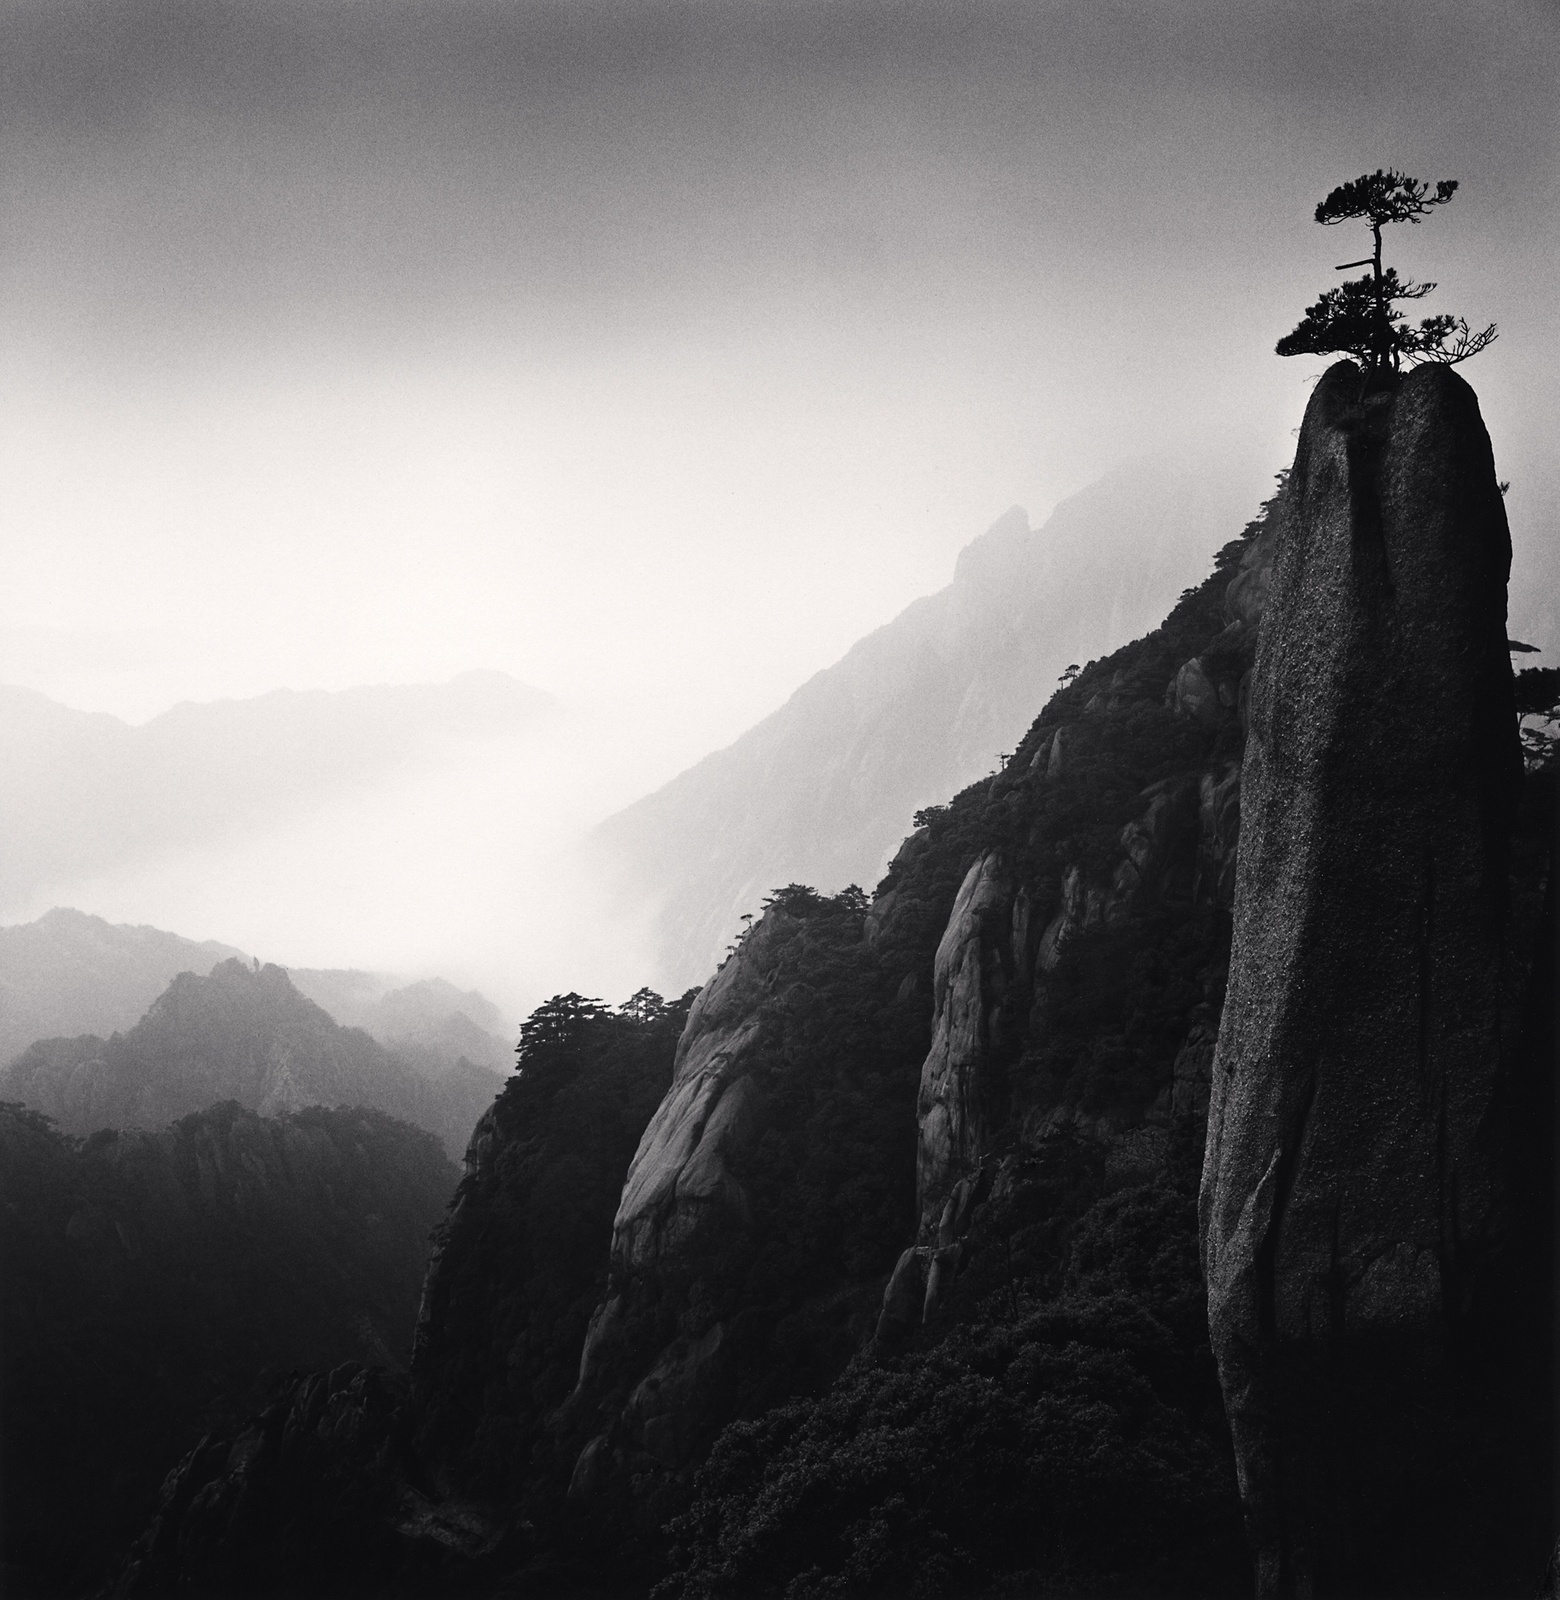 Michael Kenna, Huangshan Mountains Study 25, Anhui, China, 2009